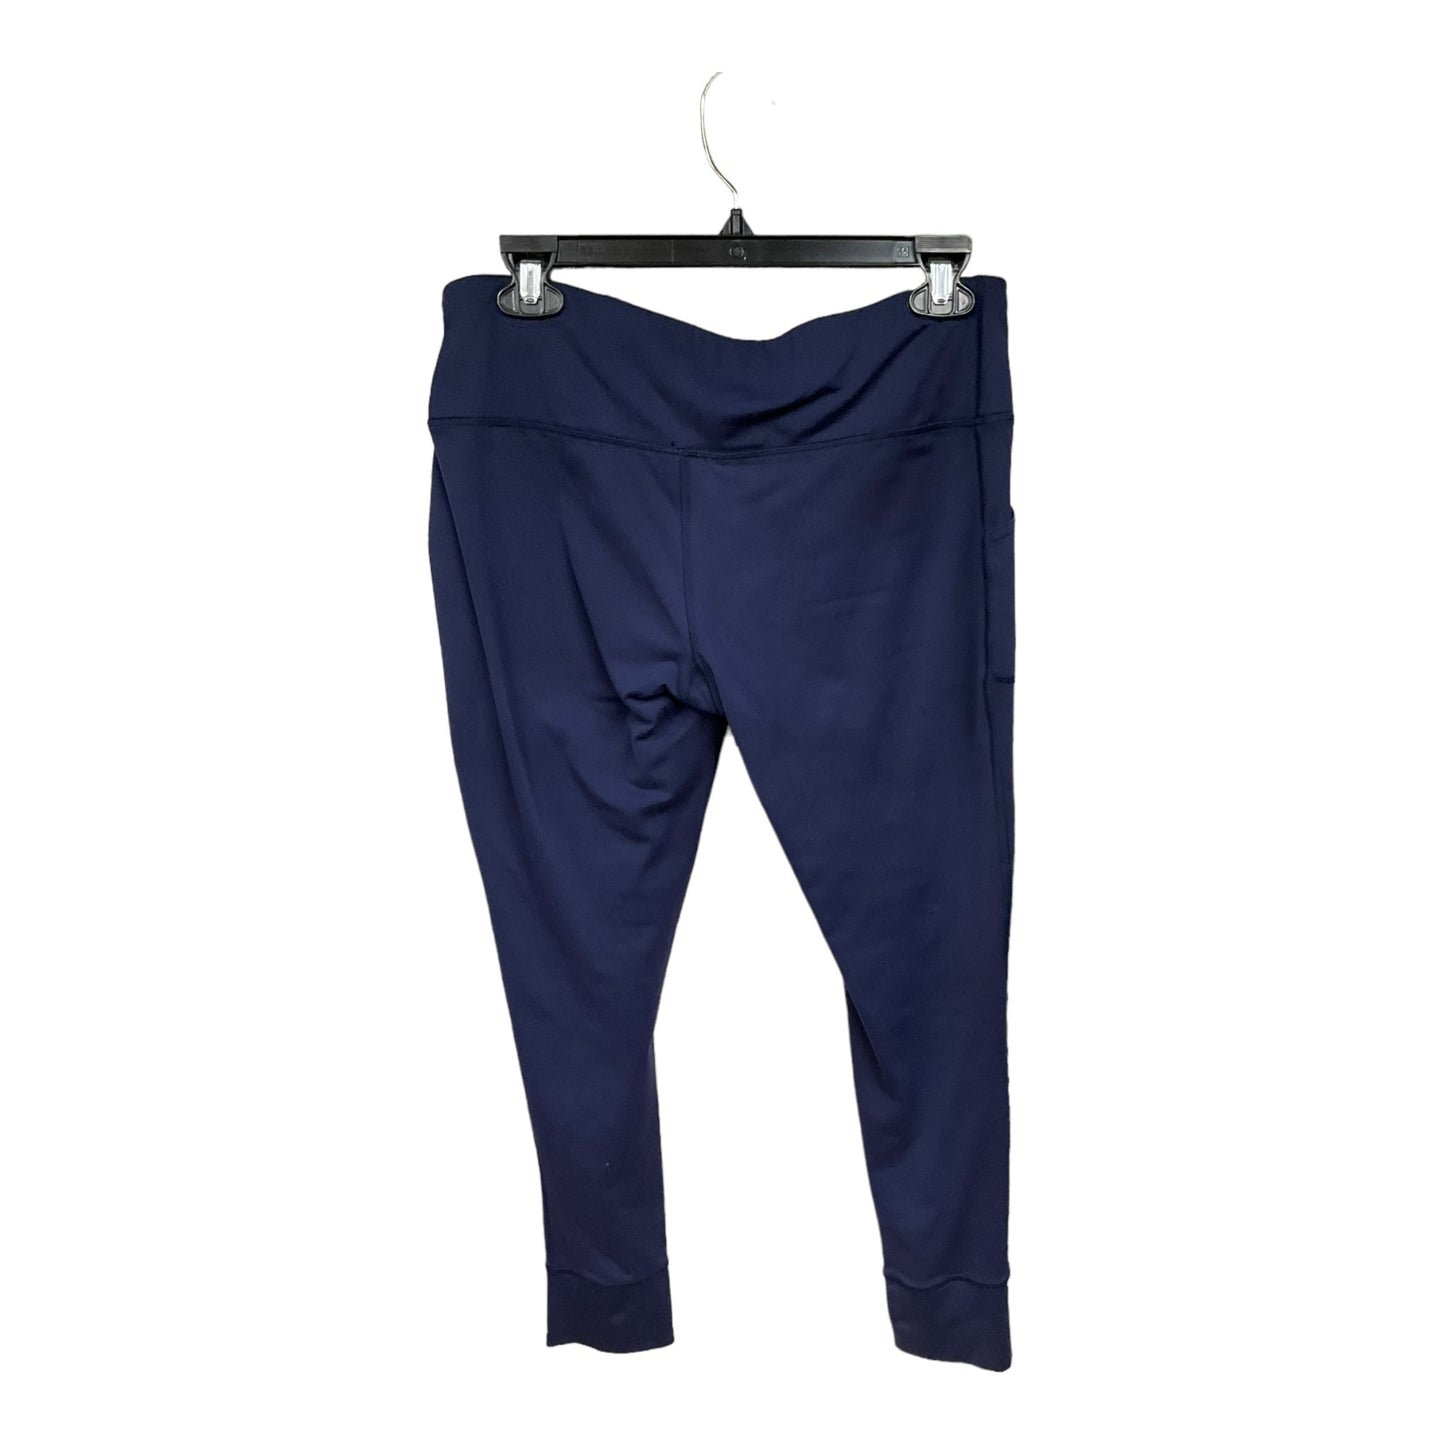 Navy Athletic Pants Mta Pro, Size M